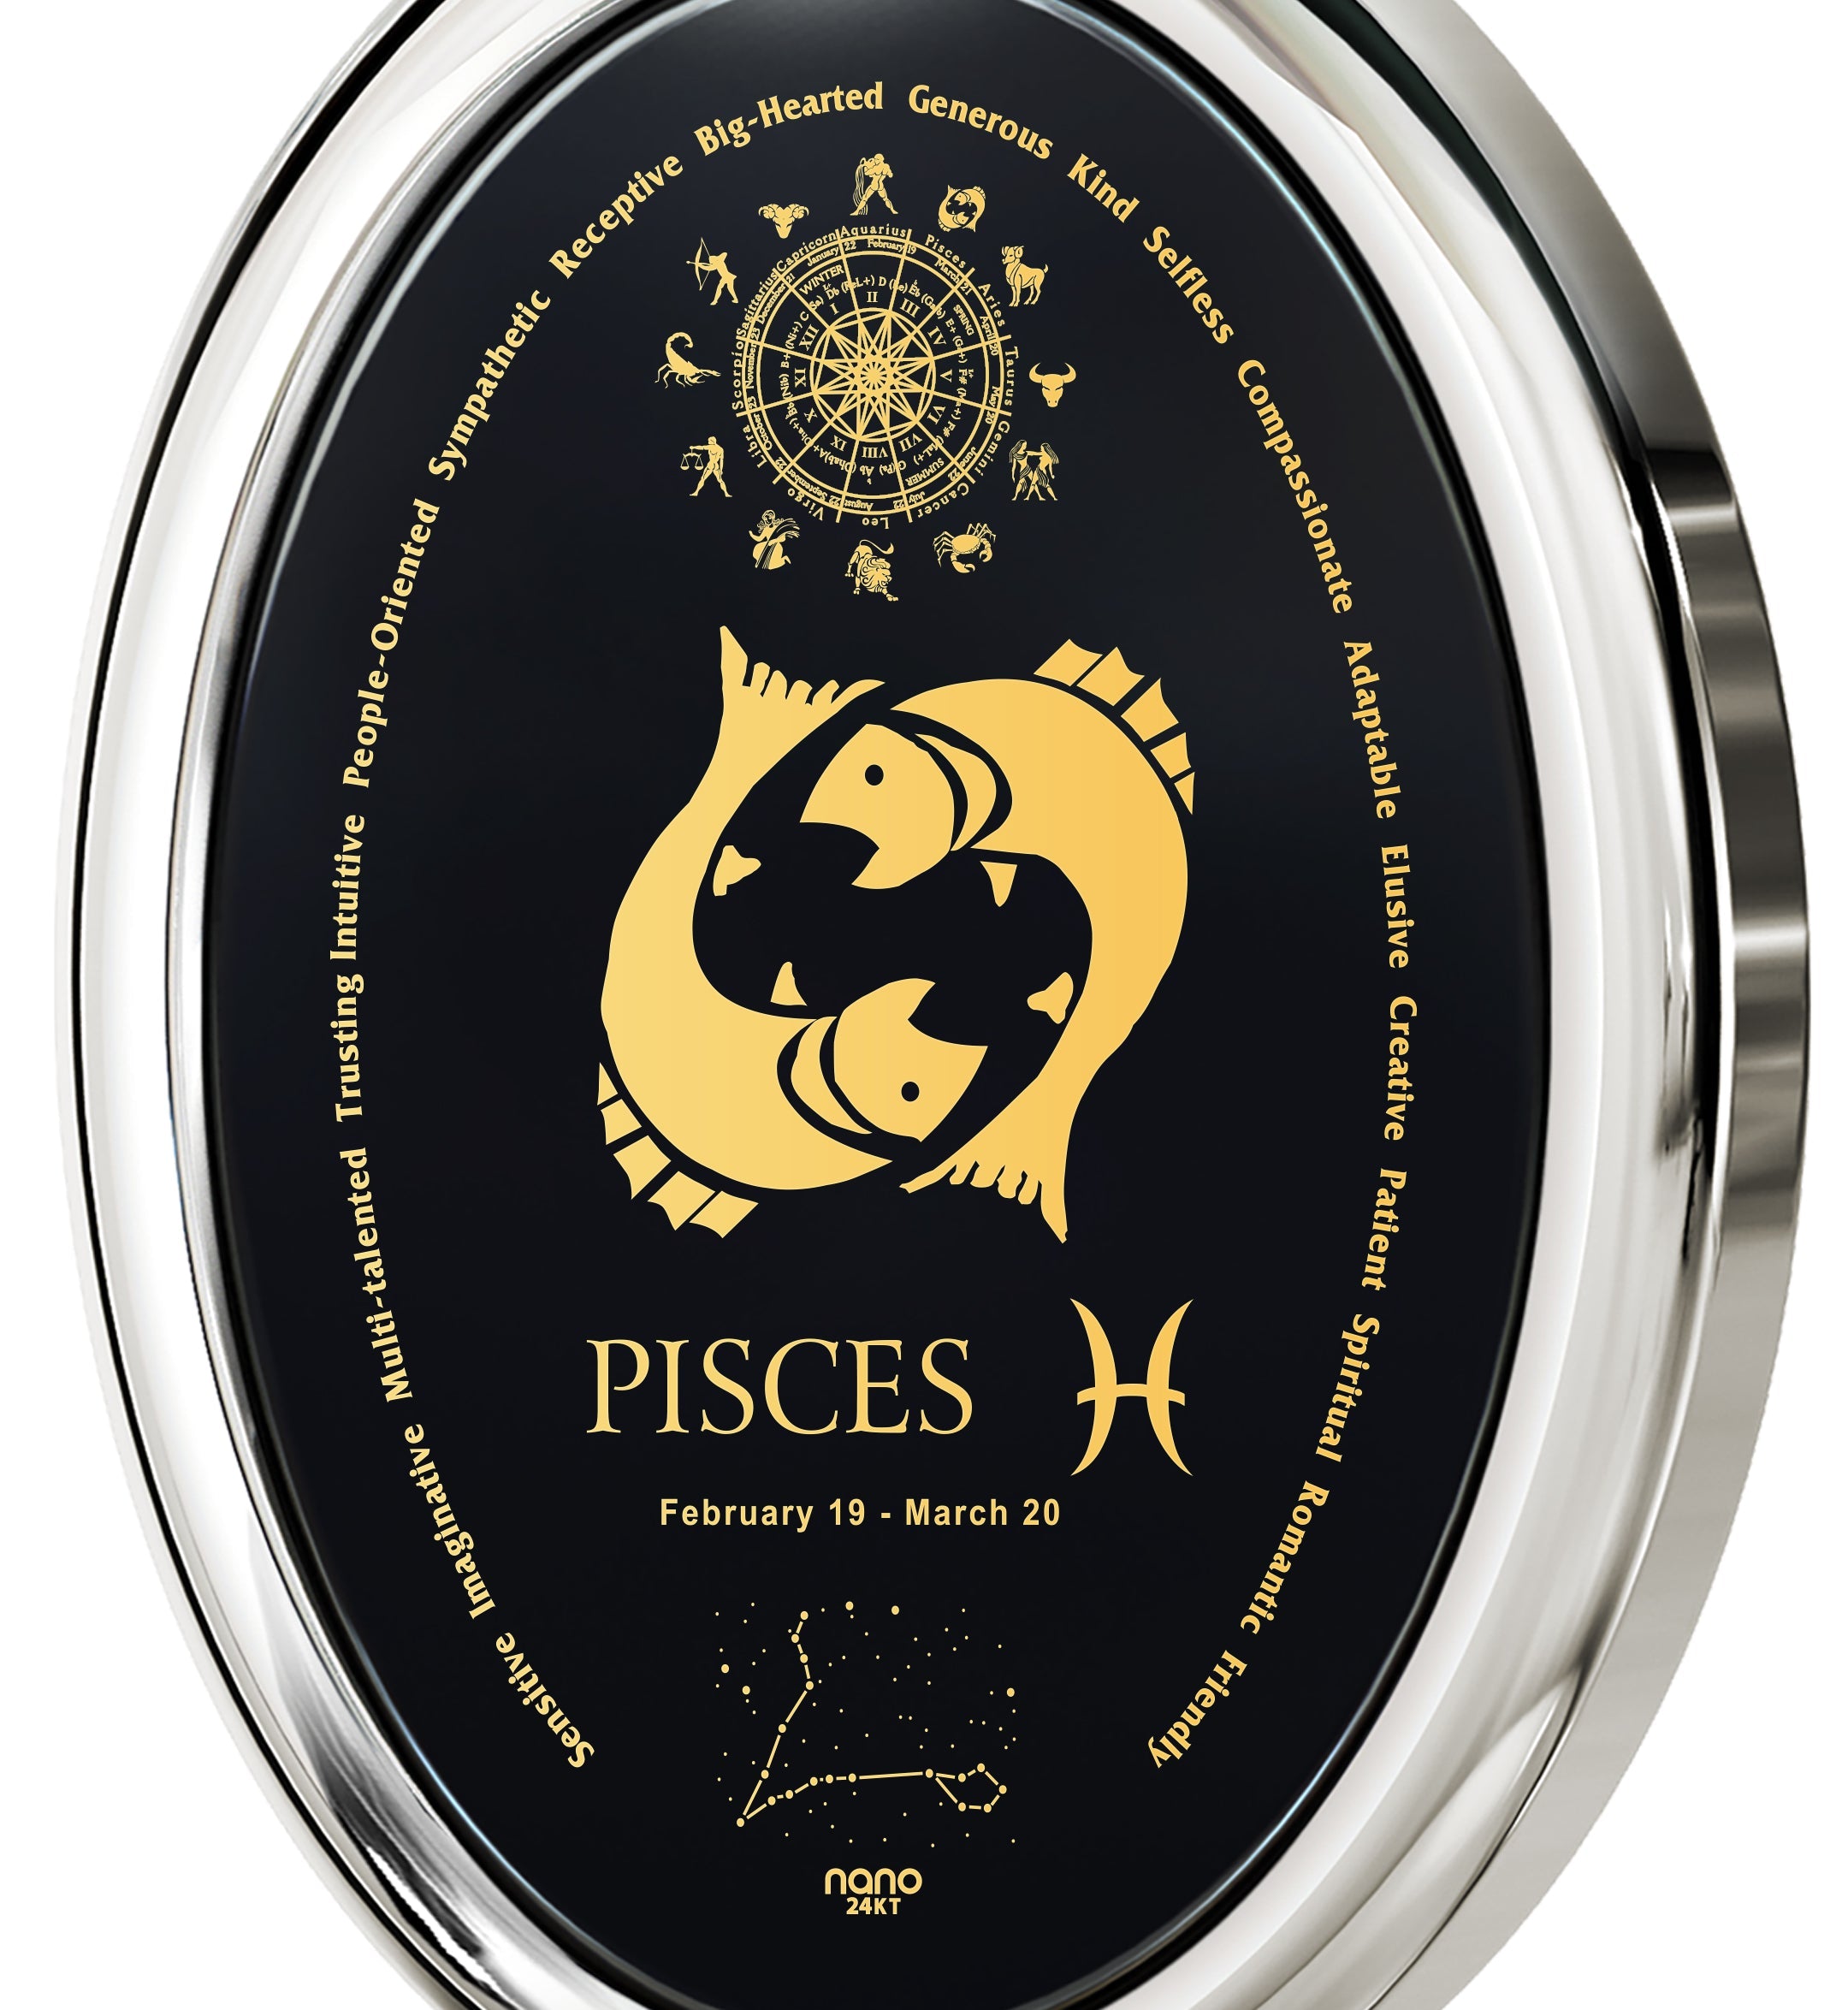 Pisces Necklace Zodiac Pendant 24k Gold Inscribed on Onyx Stone